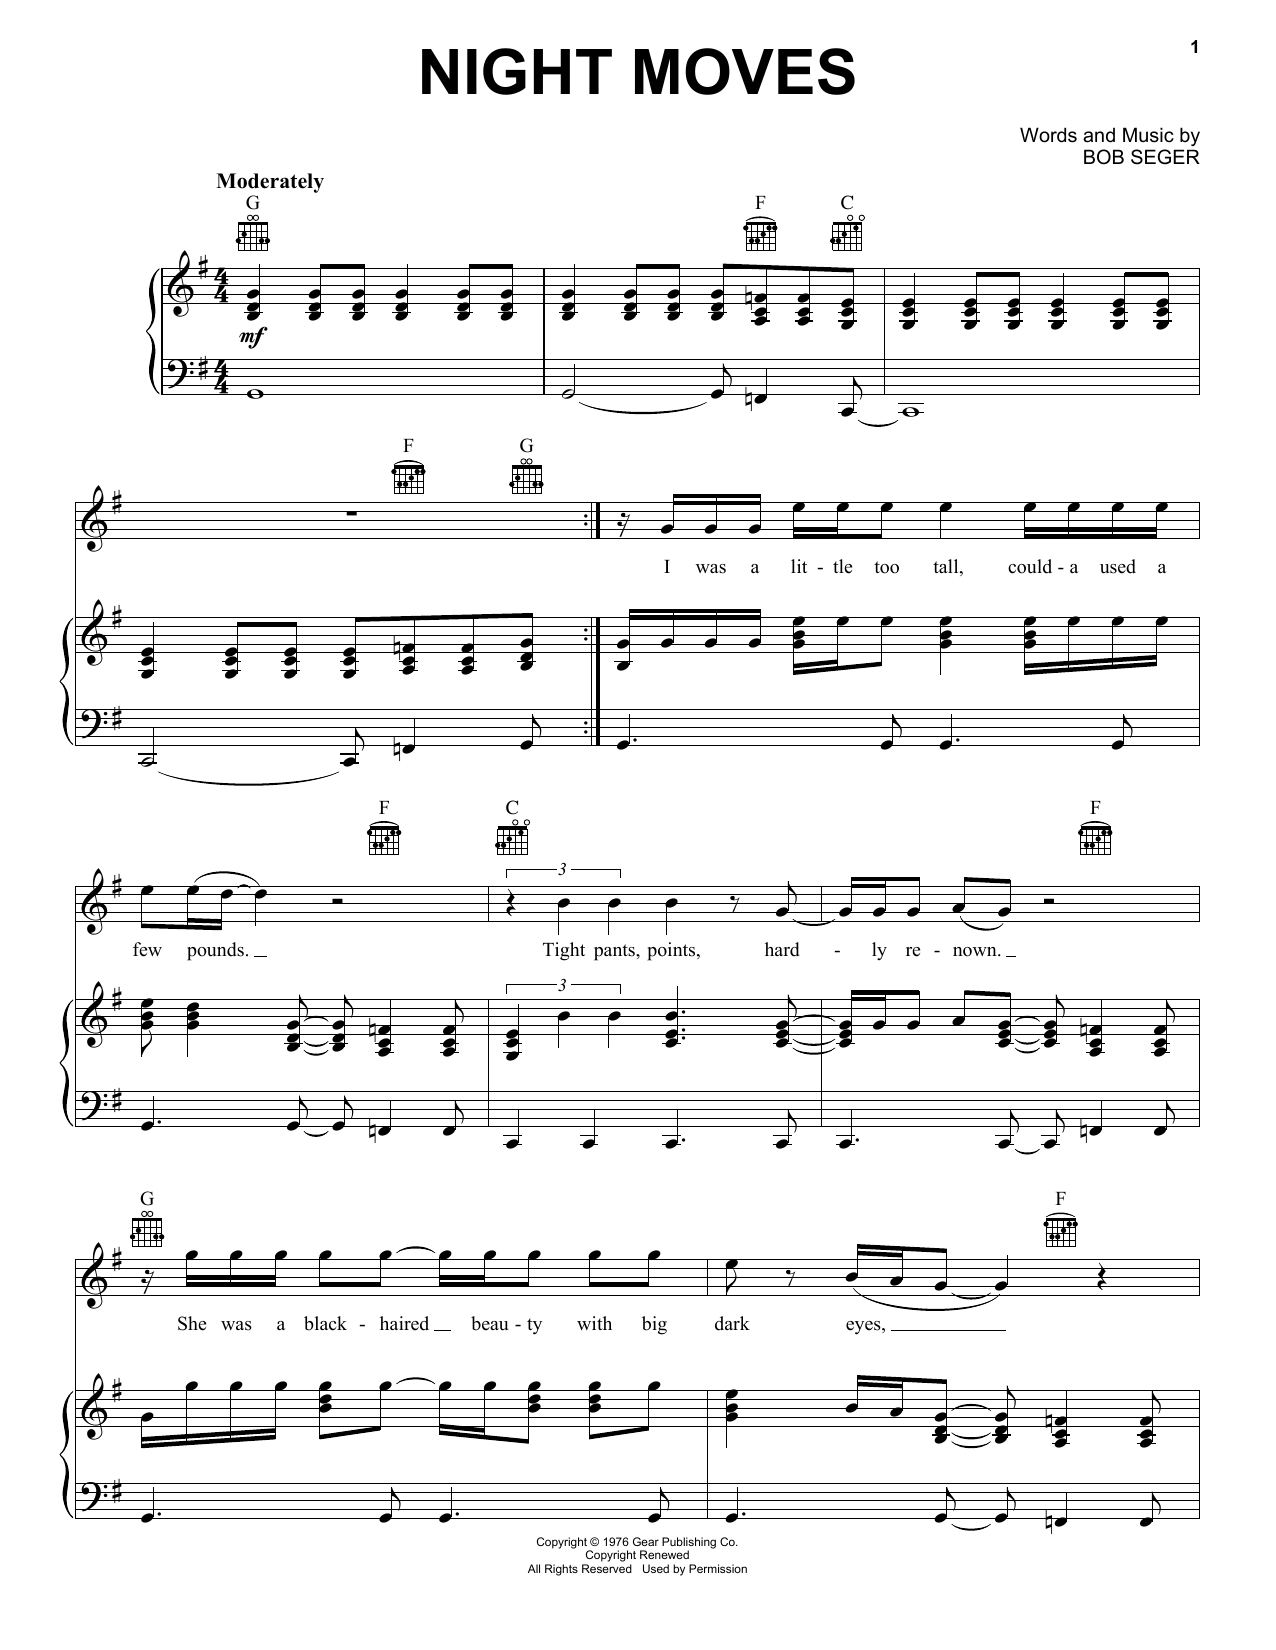 Bob Seger Night Moves Sheet Music Notes & Chords for Ukulele with strumming patterns - Download or Print PDF